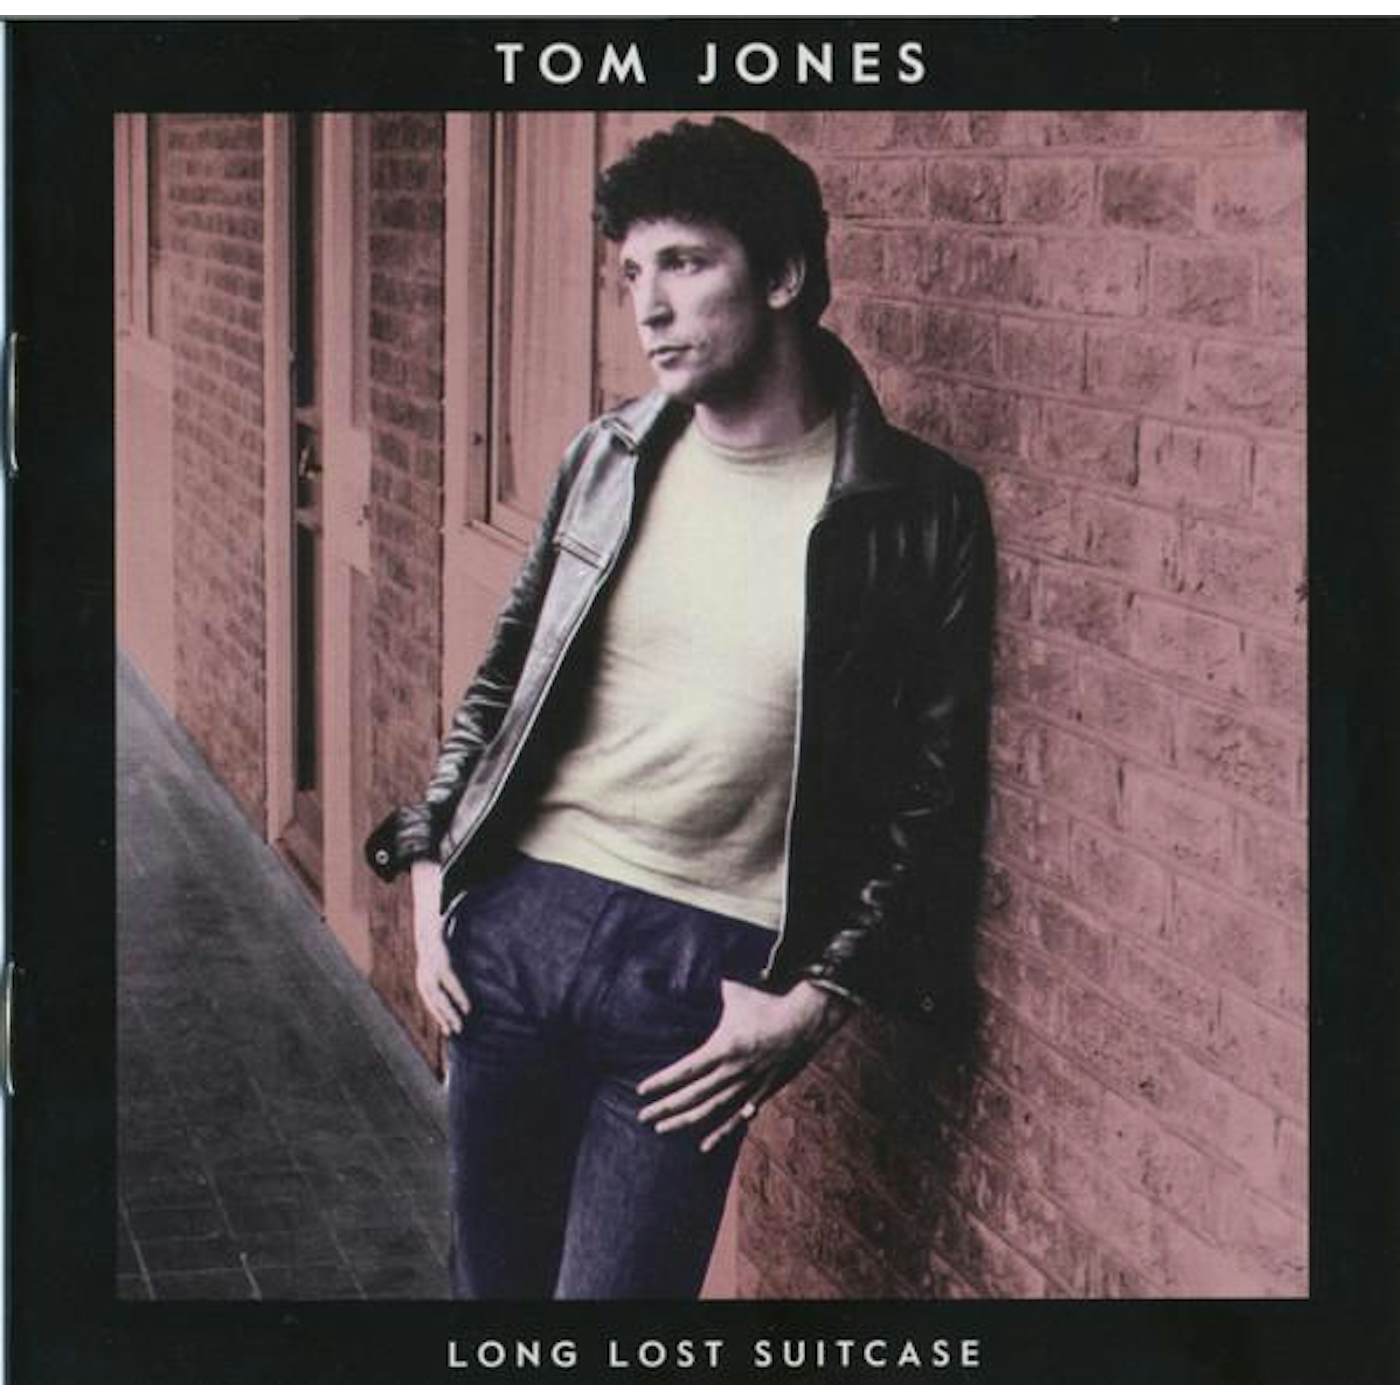 Tom Jones LONG LOST SUITCASE CD